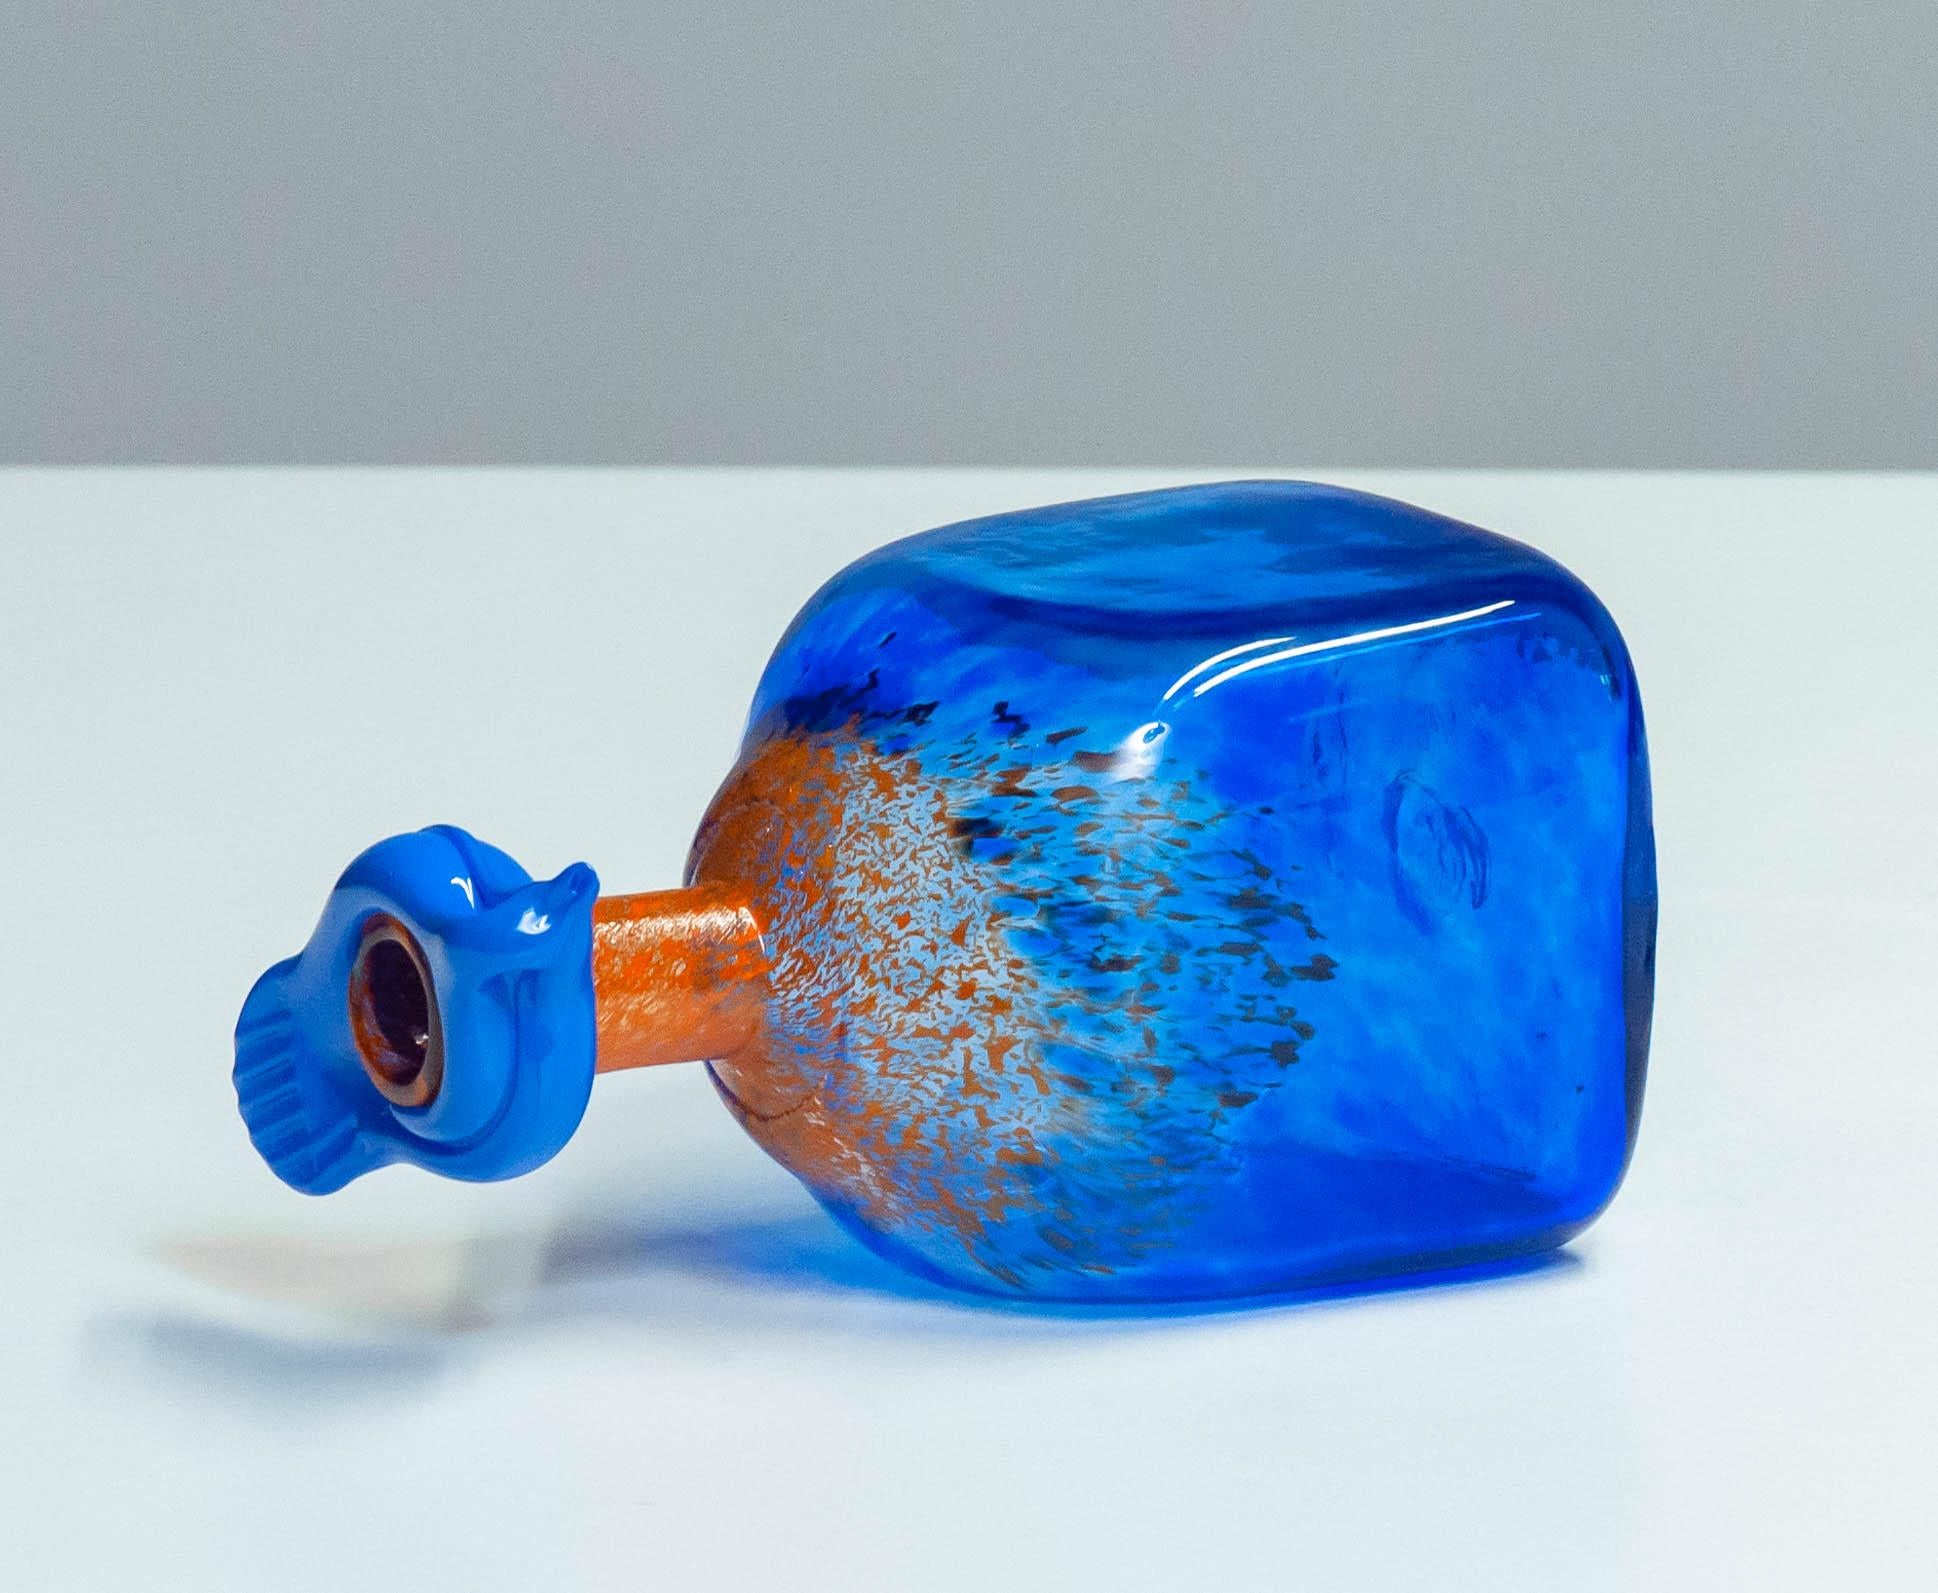 1980s Blue Art Glass Bottle Handmade by Staffan Gellerstedt at Studio Glashyttan For Sale 1